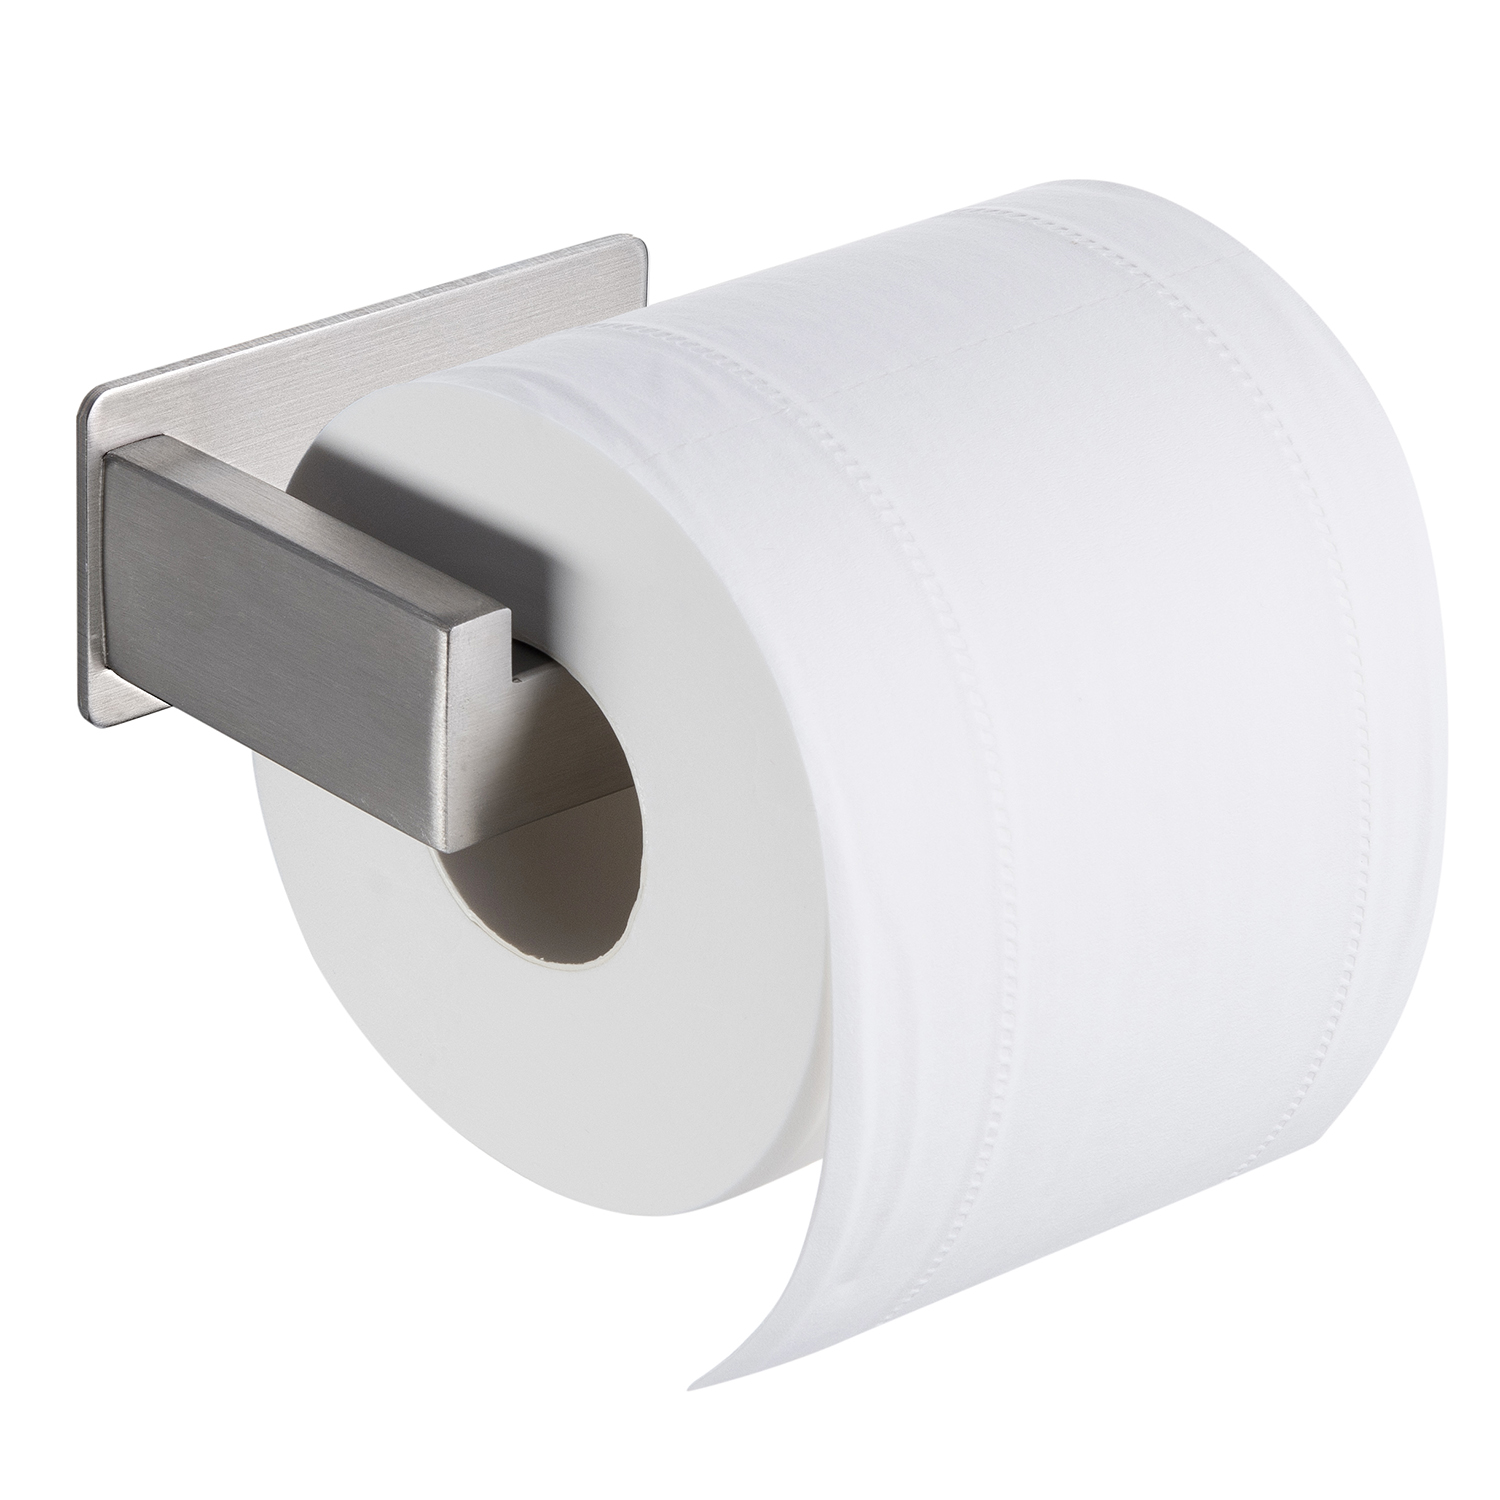 https://www.momjunction.com/wp-content/uploads/product-images/yigii-toilet-paper-holder_afl359.jpg